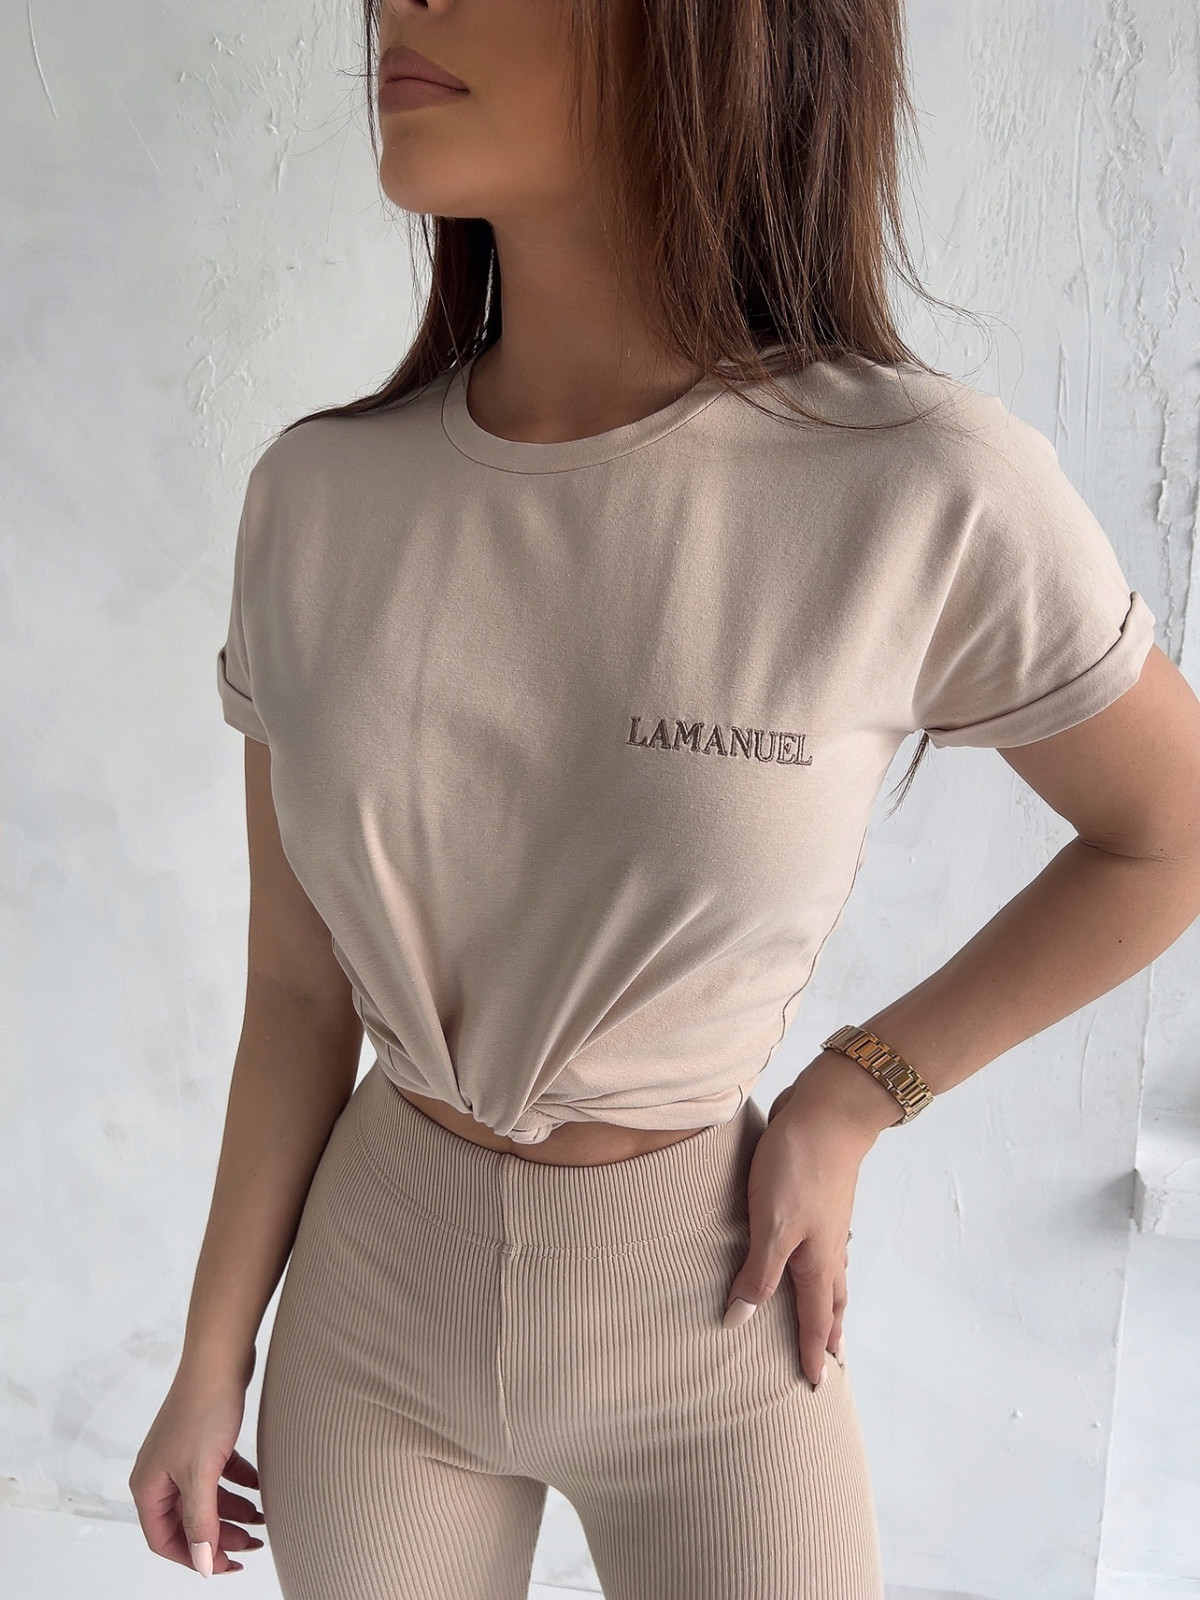 All Clothing - Beige 'LAMANUEL' T-shirt Mona